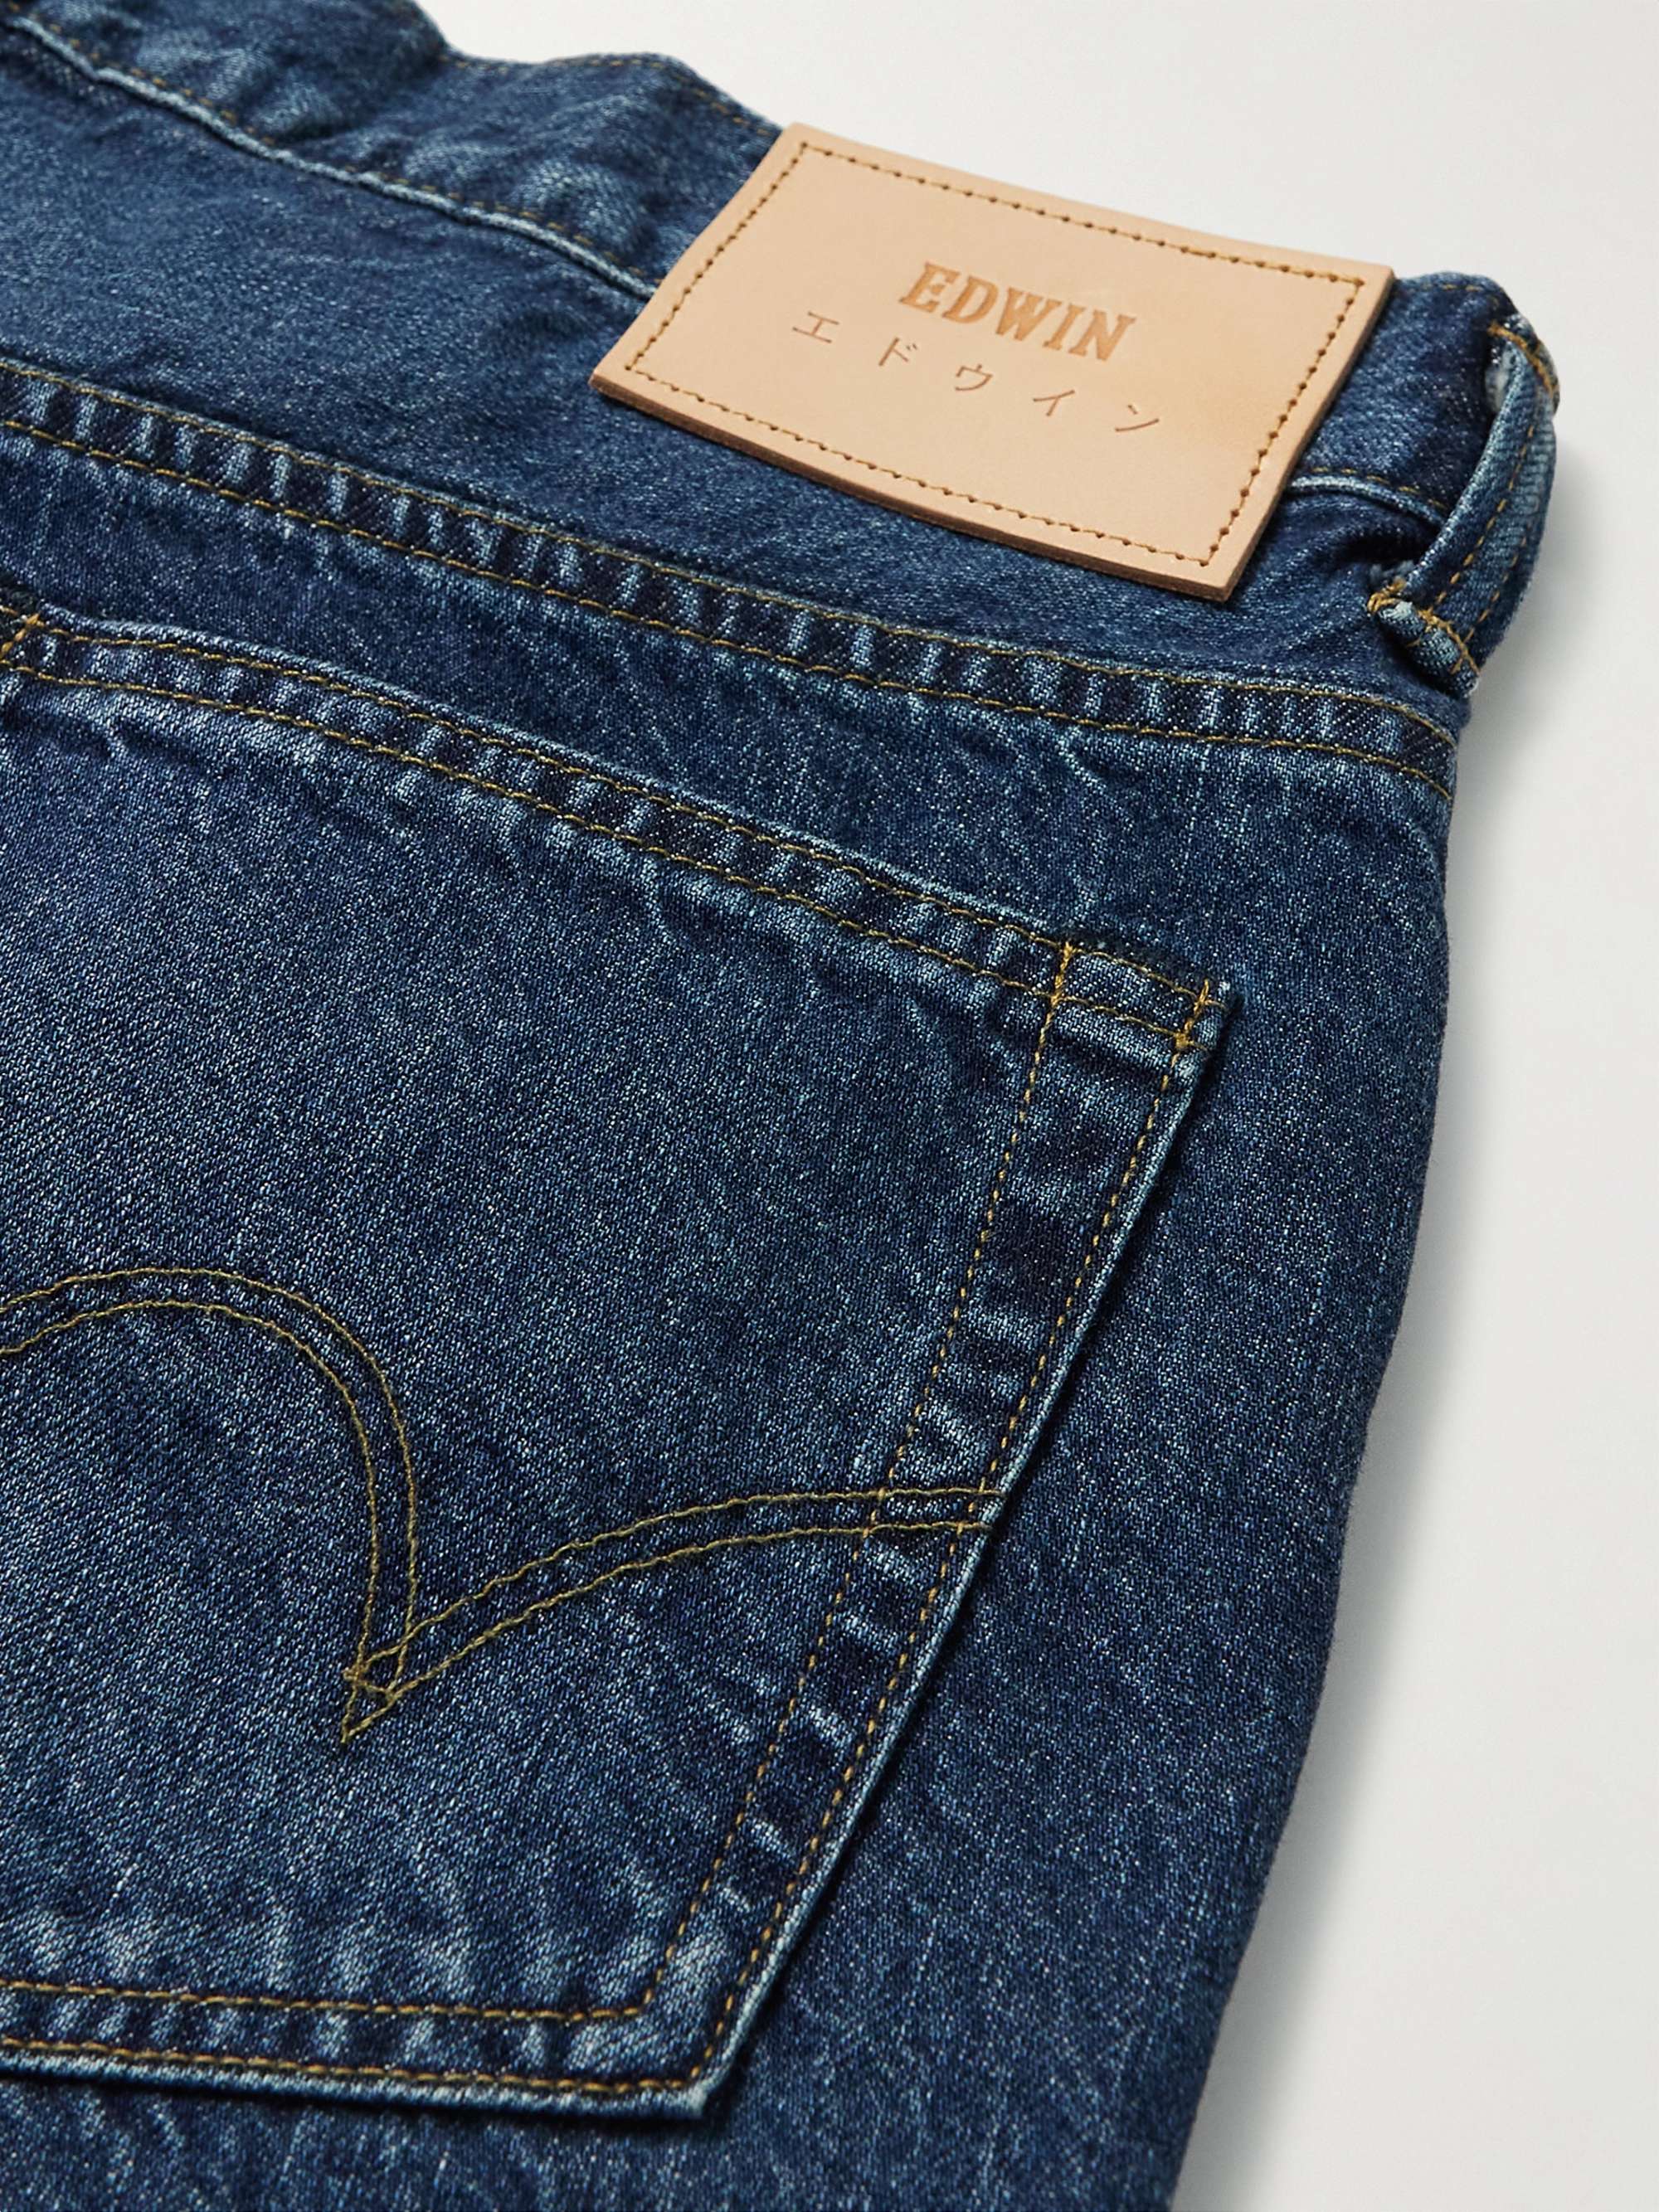 EDWIN Slim-Fit Selvedge Jeans